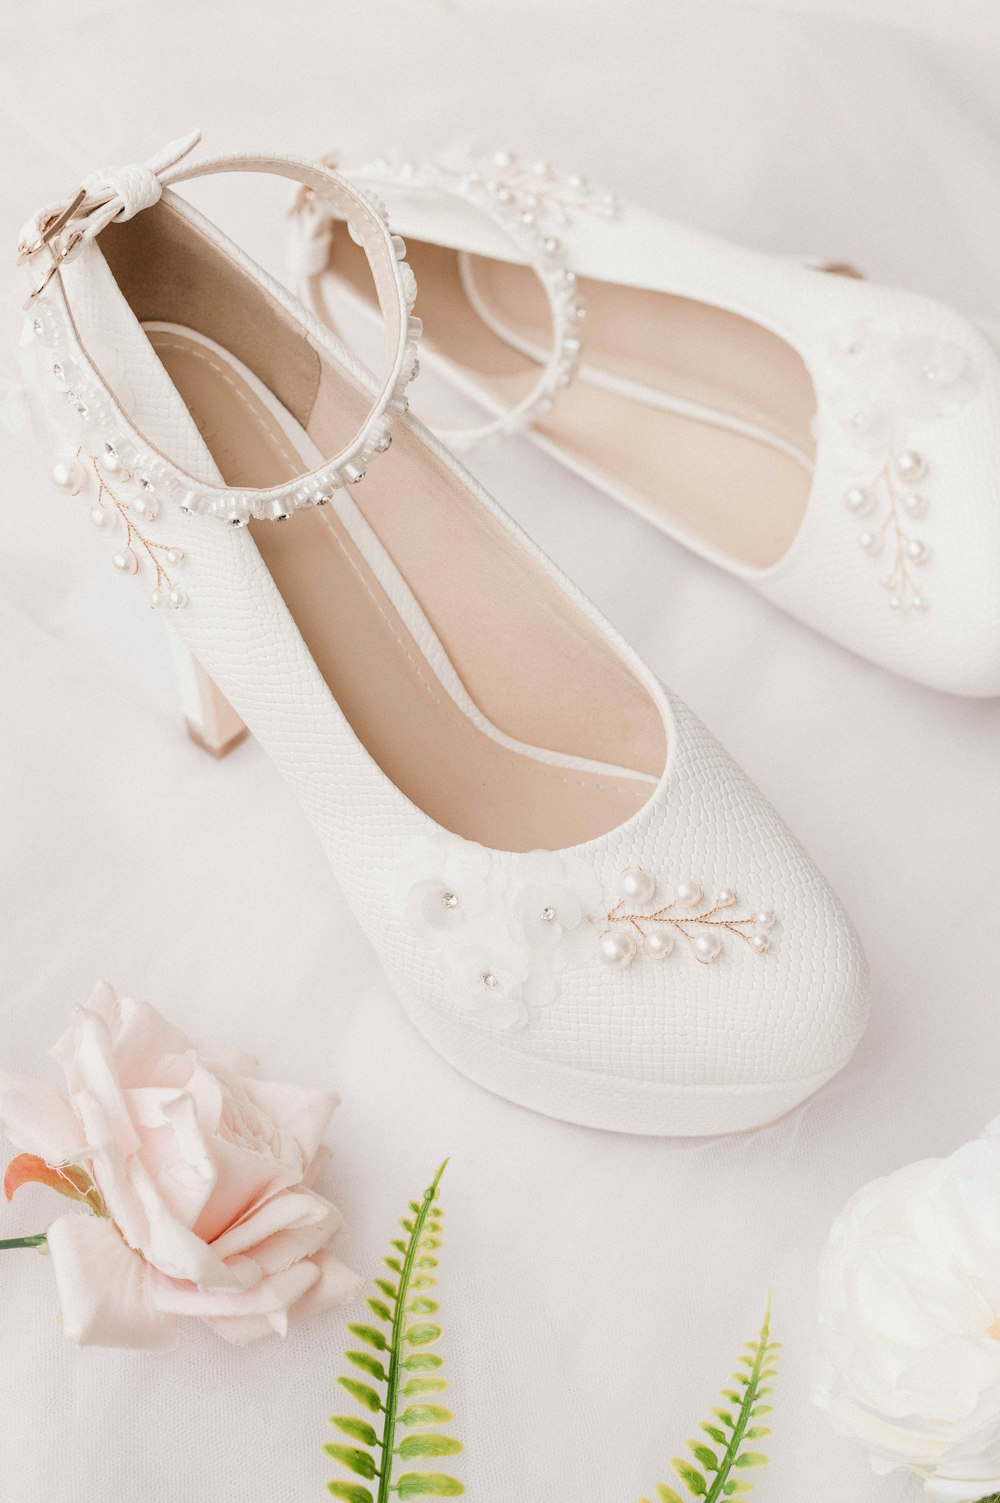 Sandalias de tacón peep toe florales blancas y grises